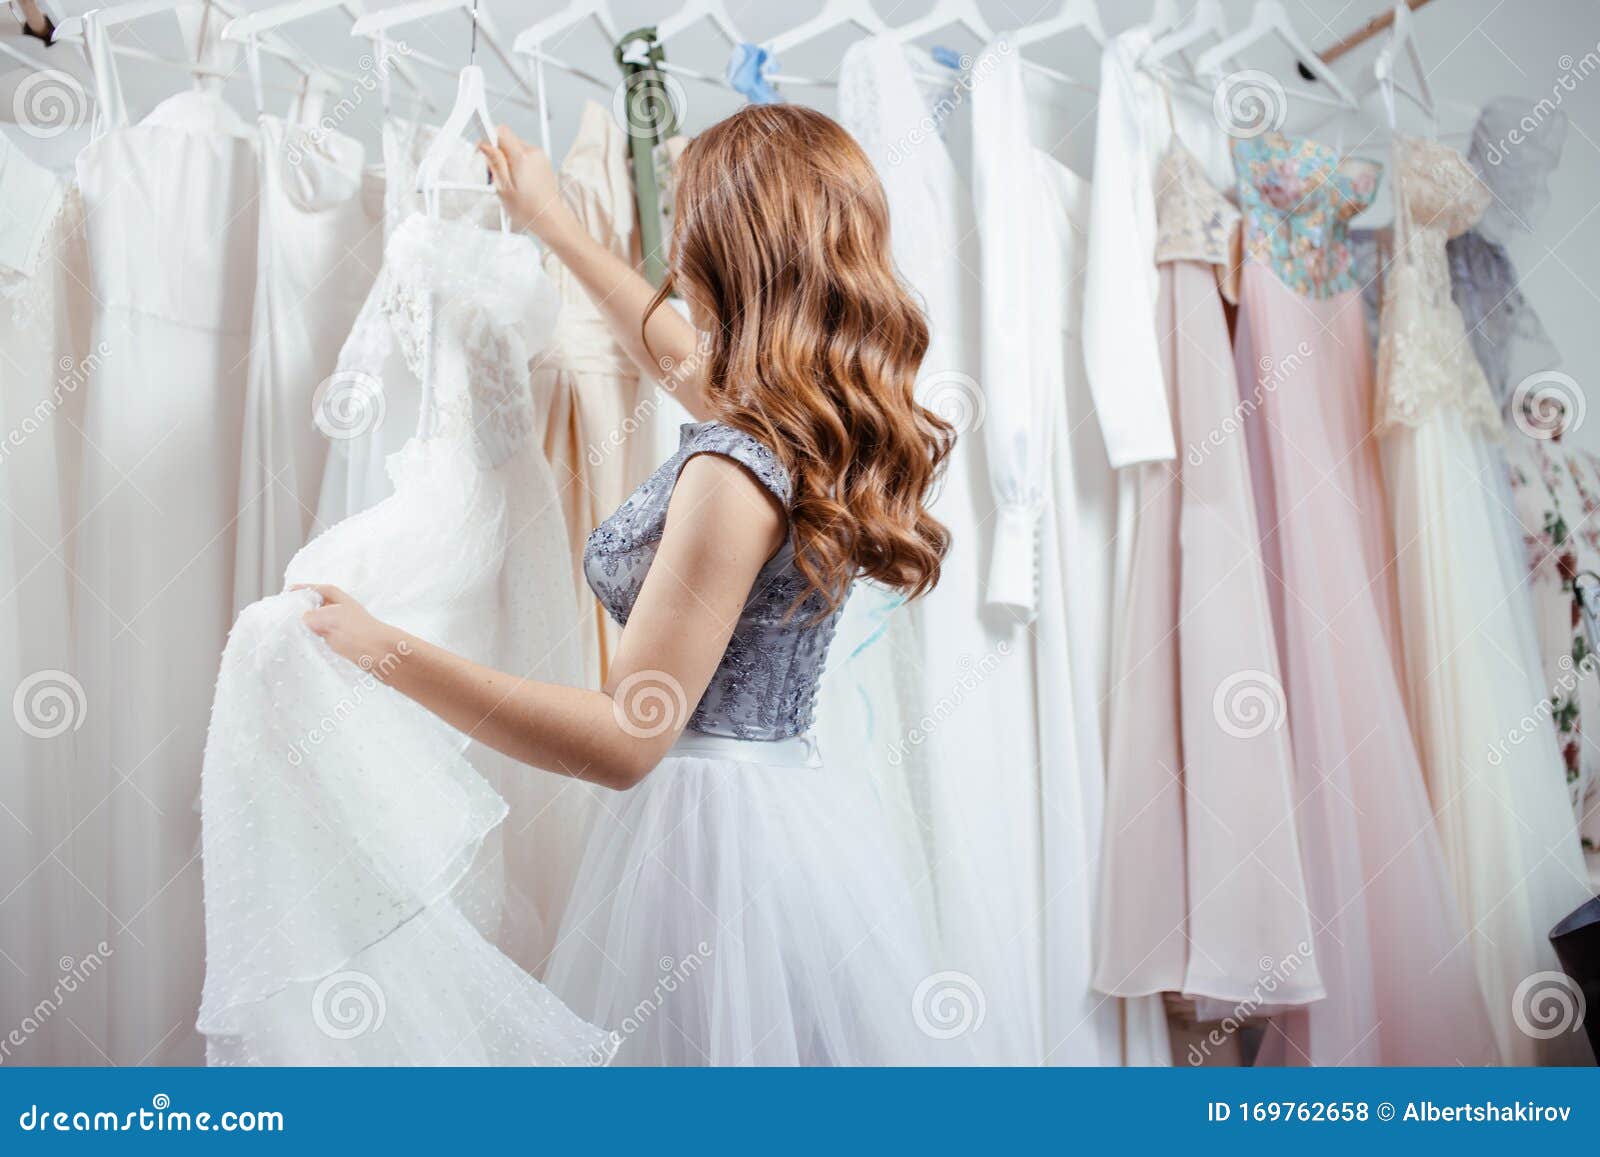 Wedding Dress Shops In Springfield Il